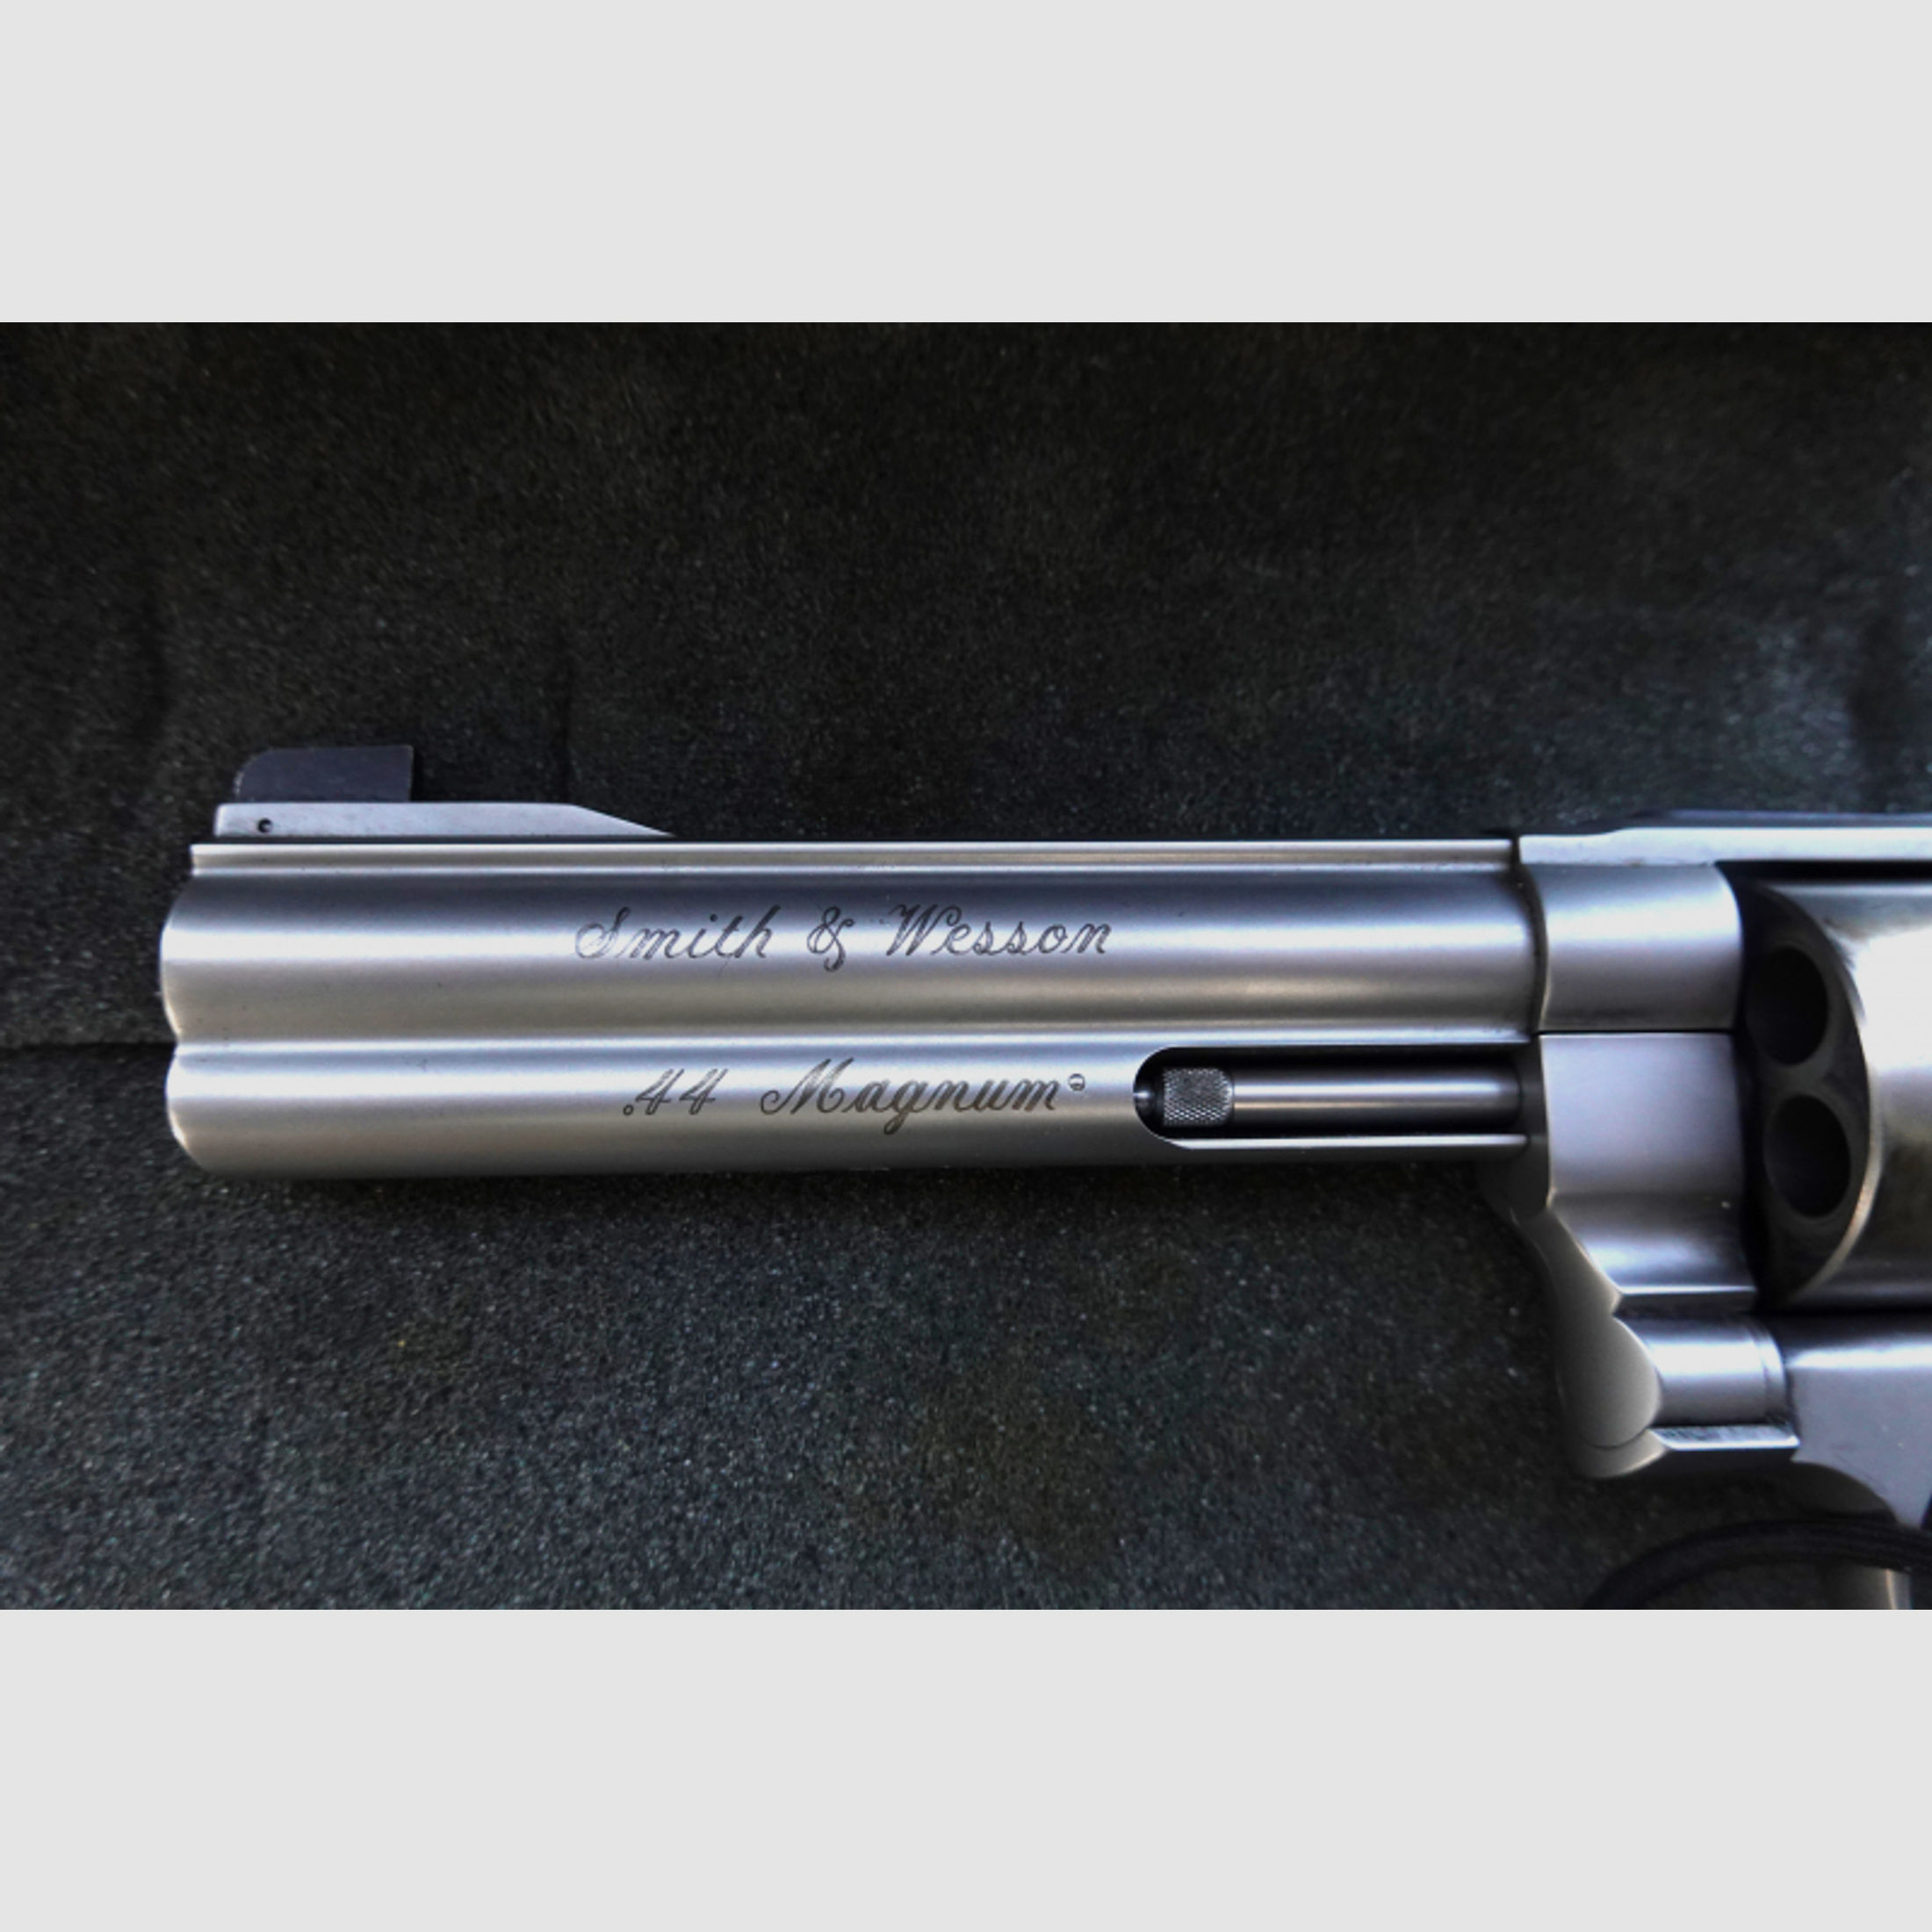 Smith & Wesson 629 Classic Champion 44 Magnum